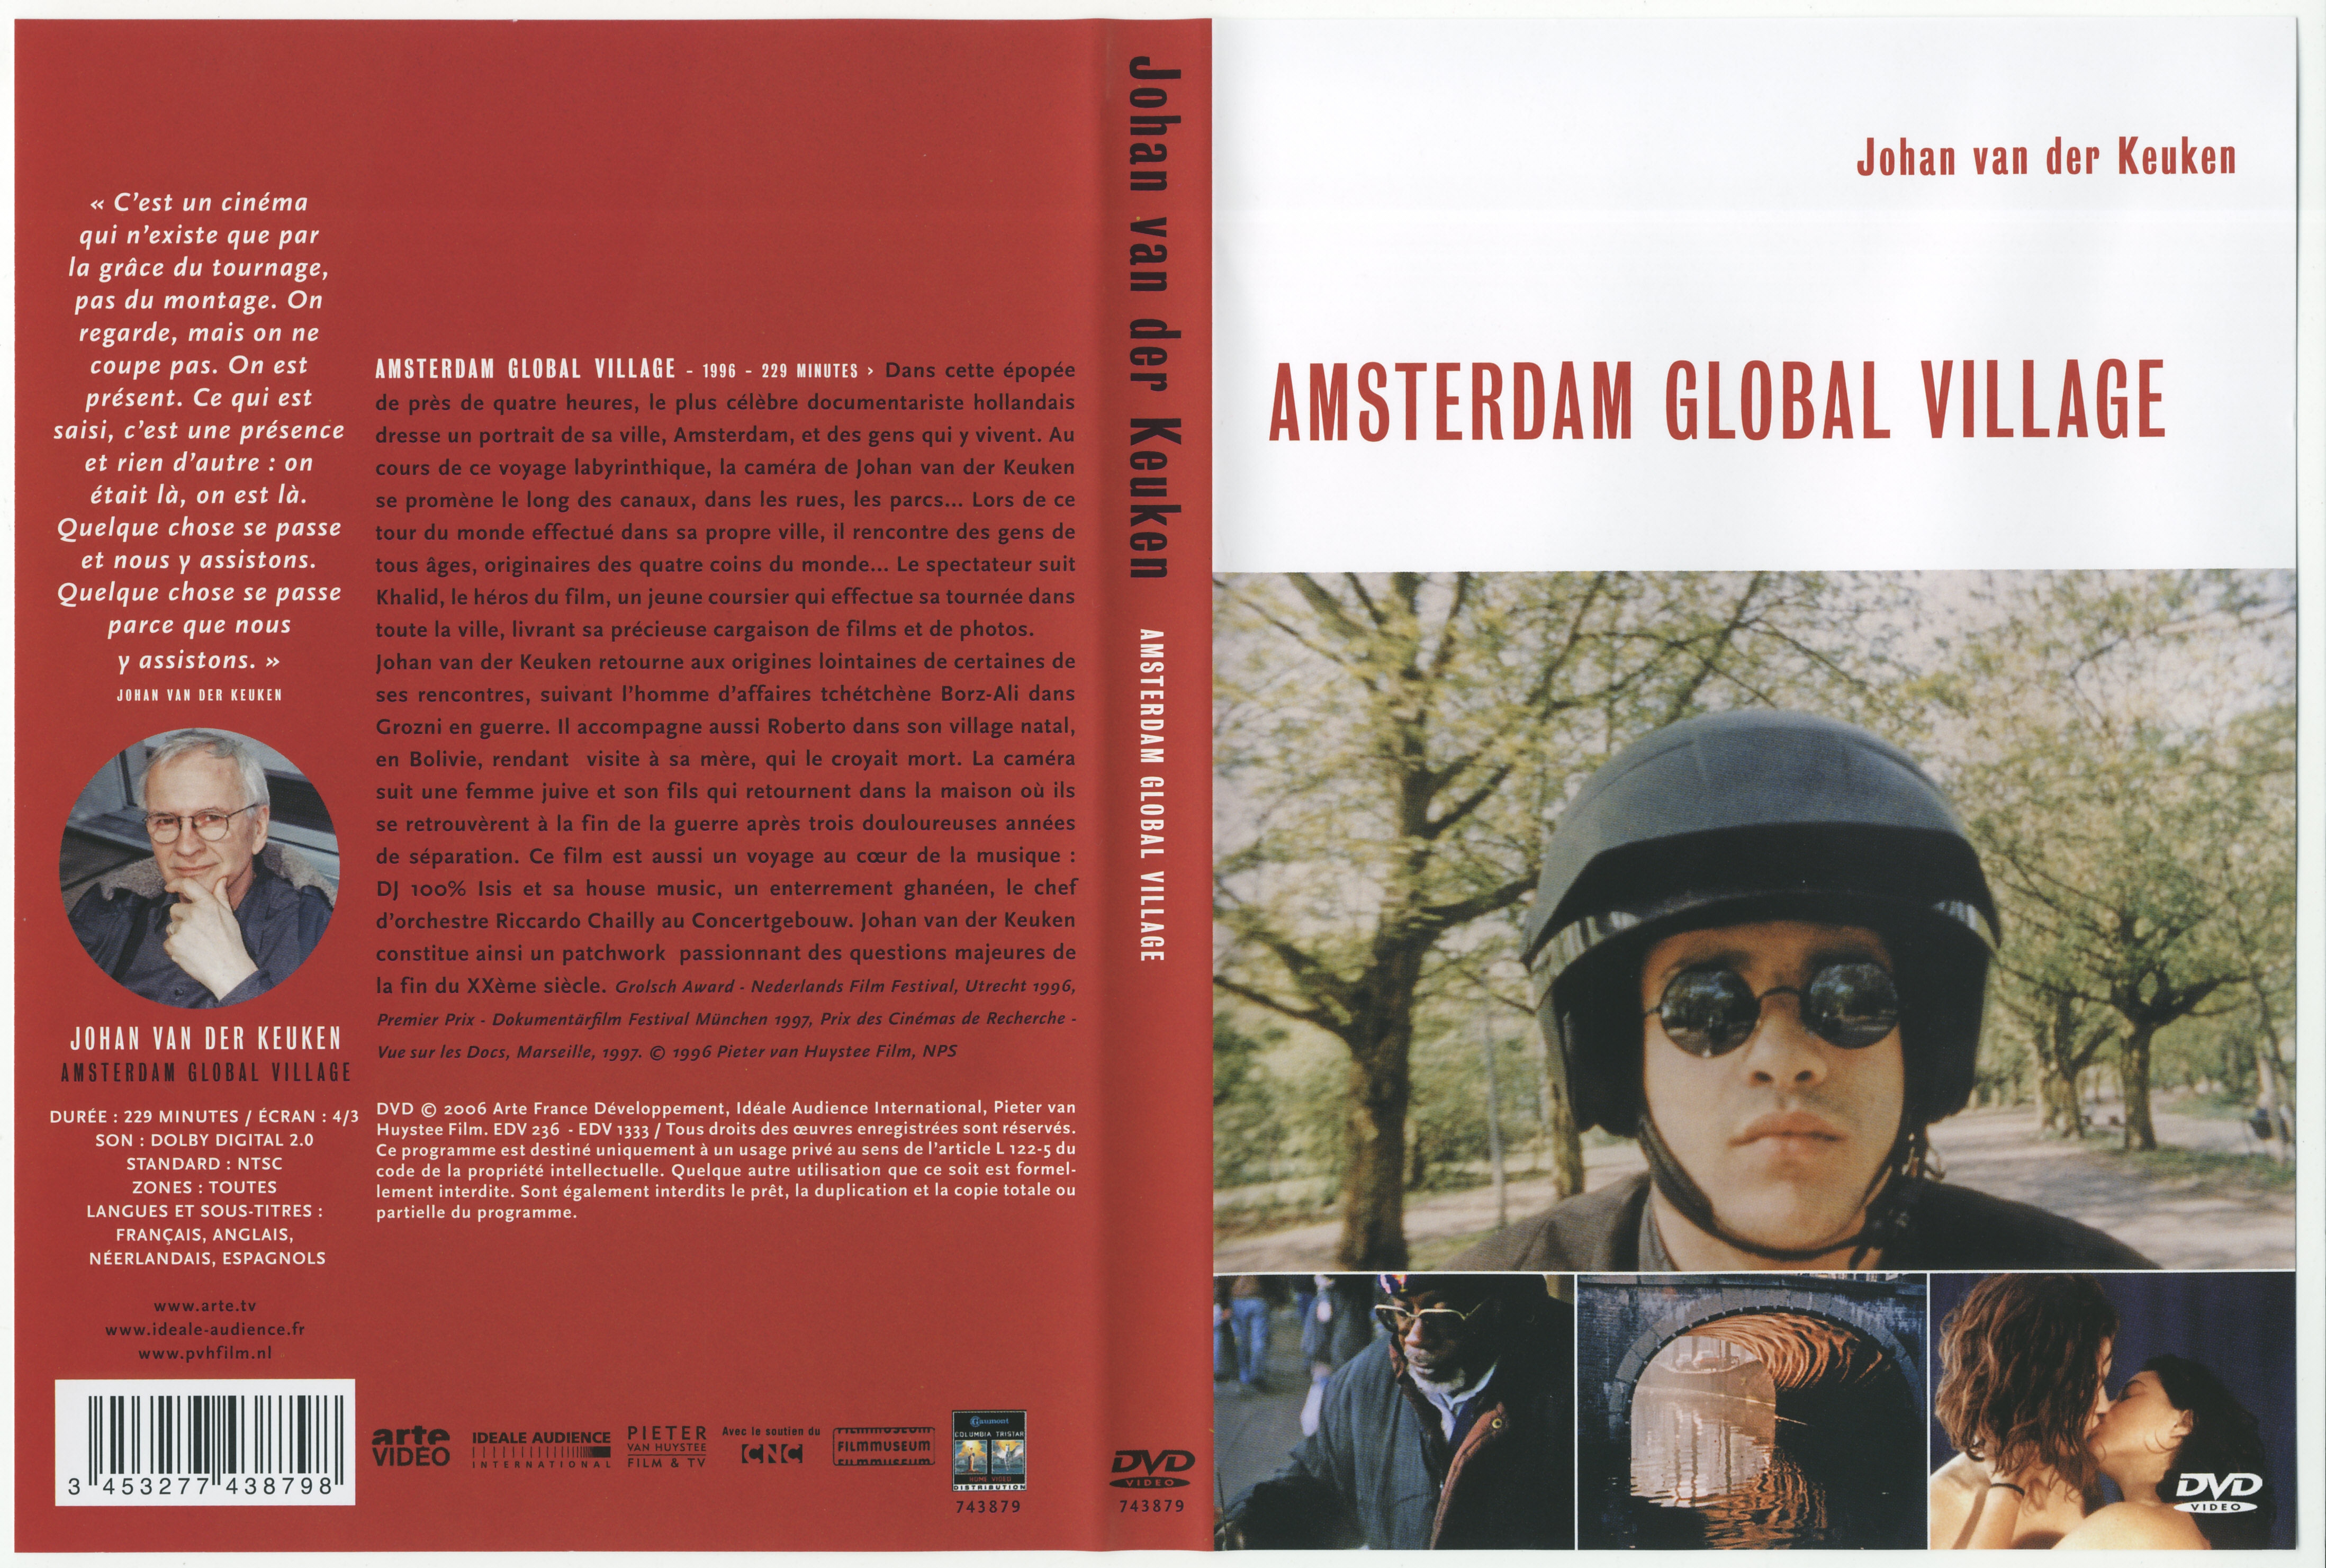 Jaquette DVD Amsterdam global village